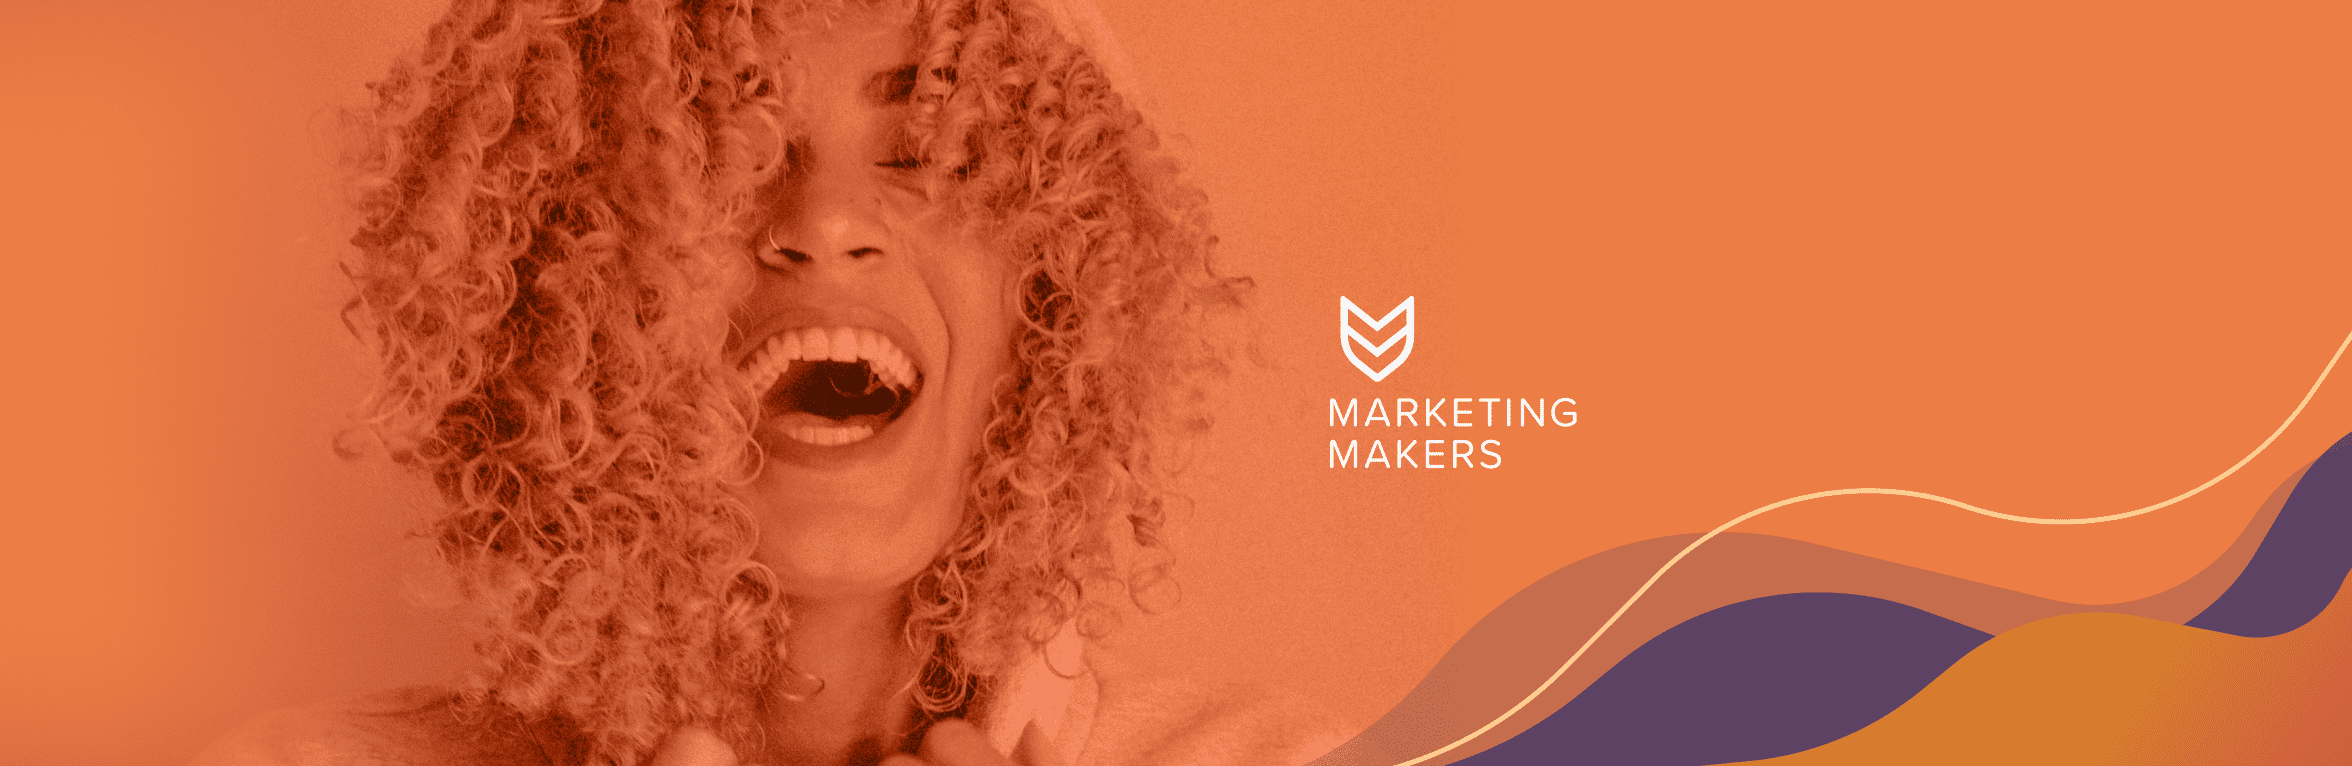 Marketing Makers webdesign - Freelance  UX/UI Designer and Lead Amsterdam